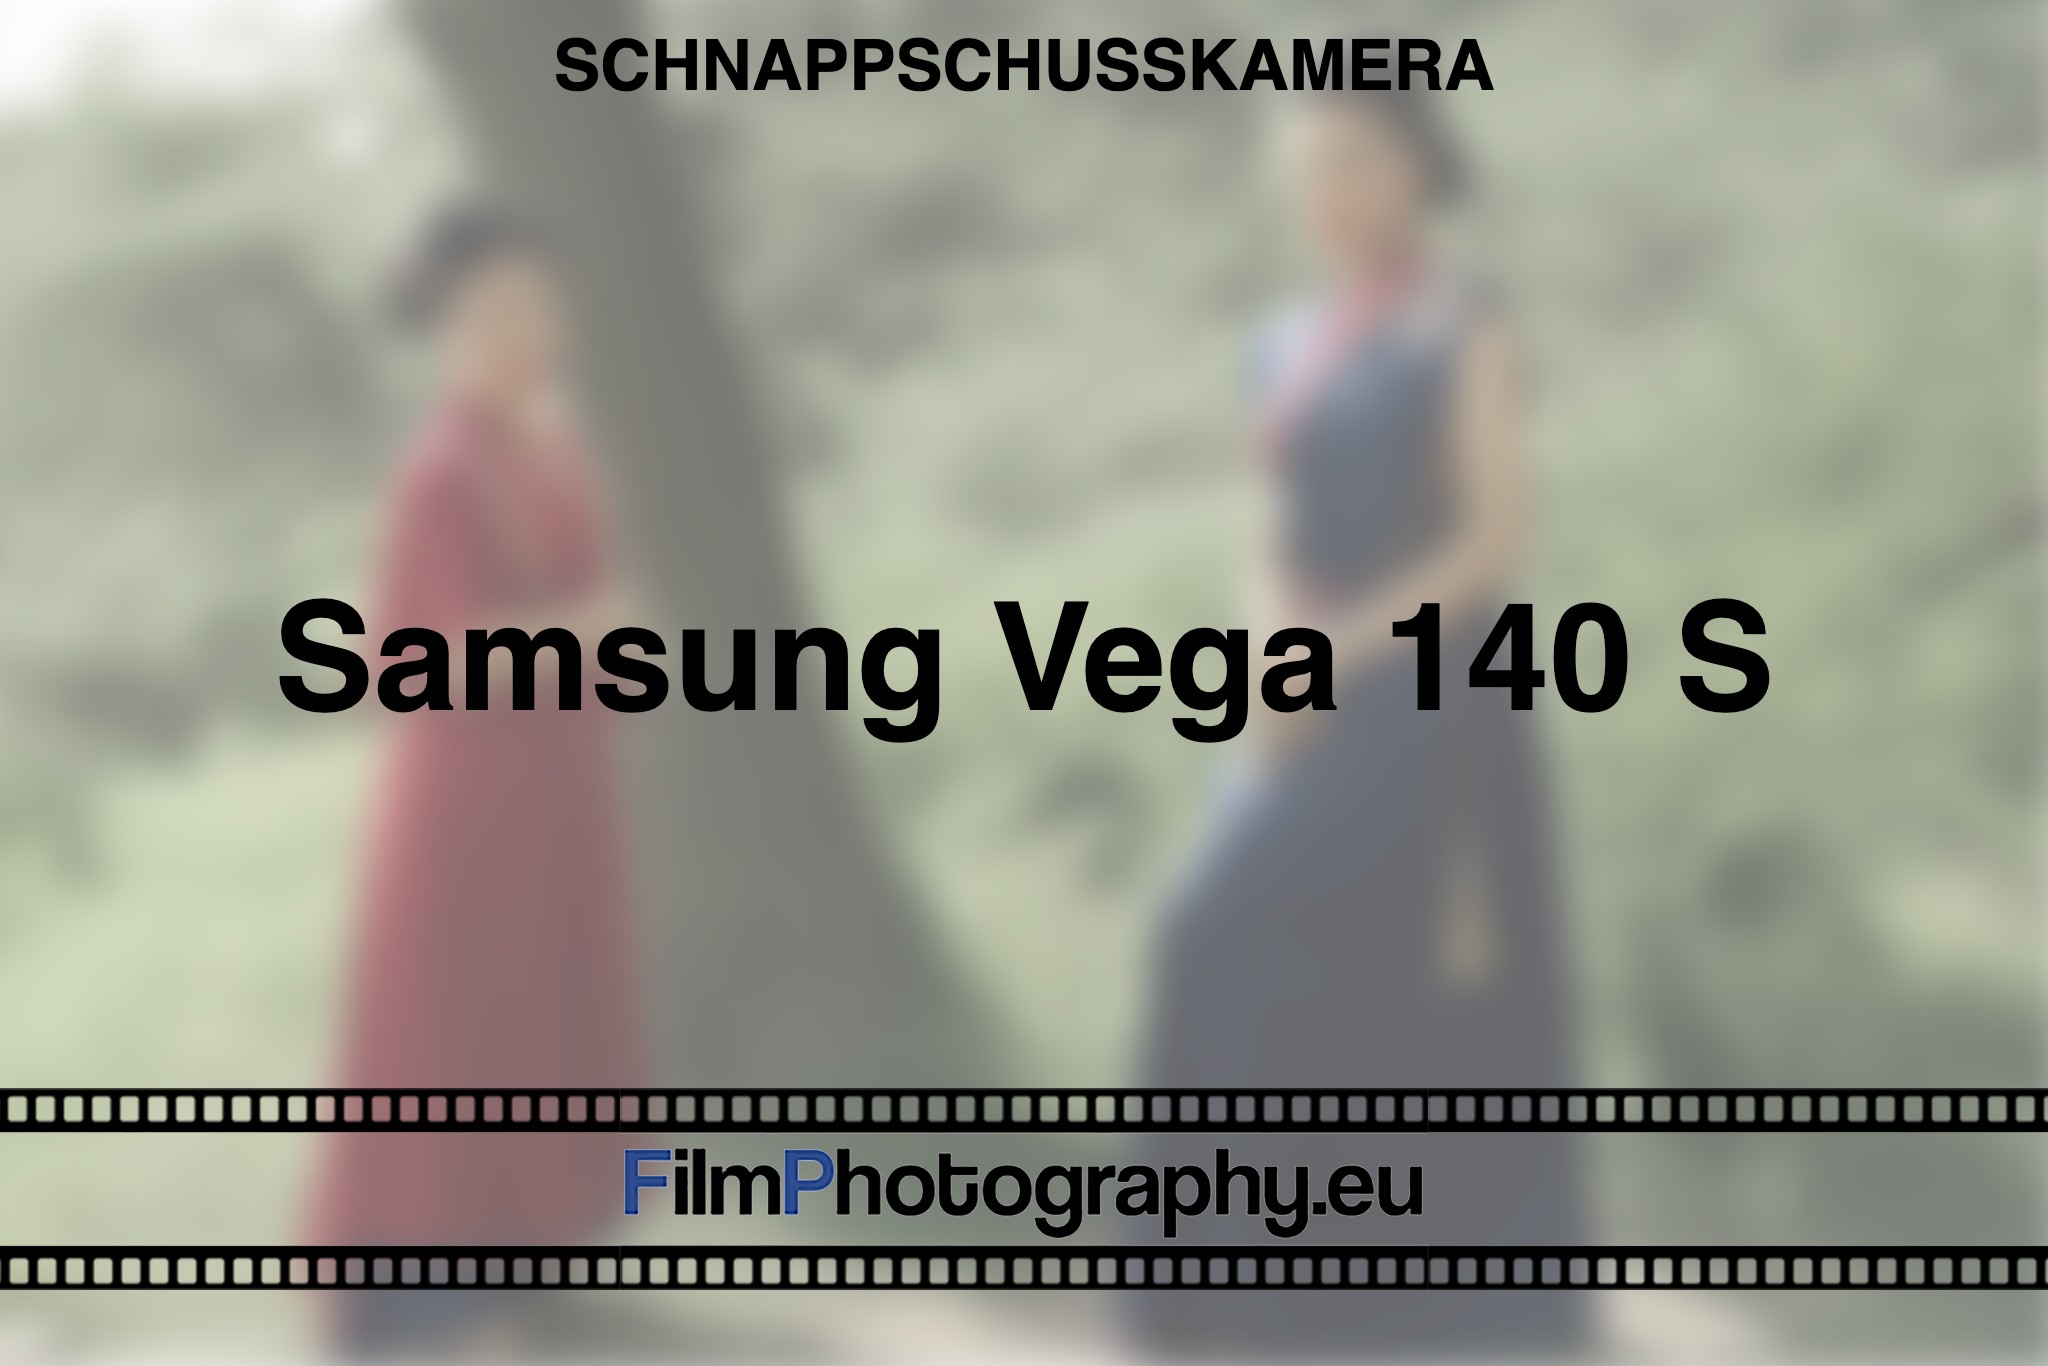 samsung-vega-140-s-schnappschusskamera-bnv